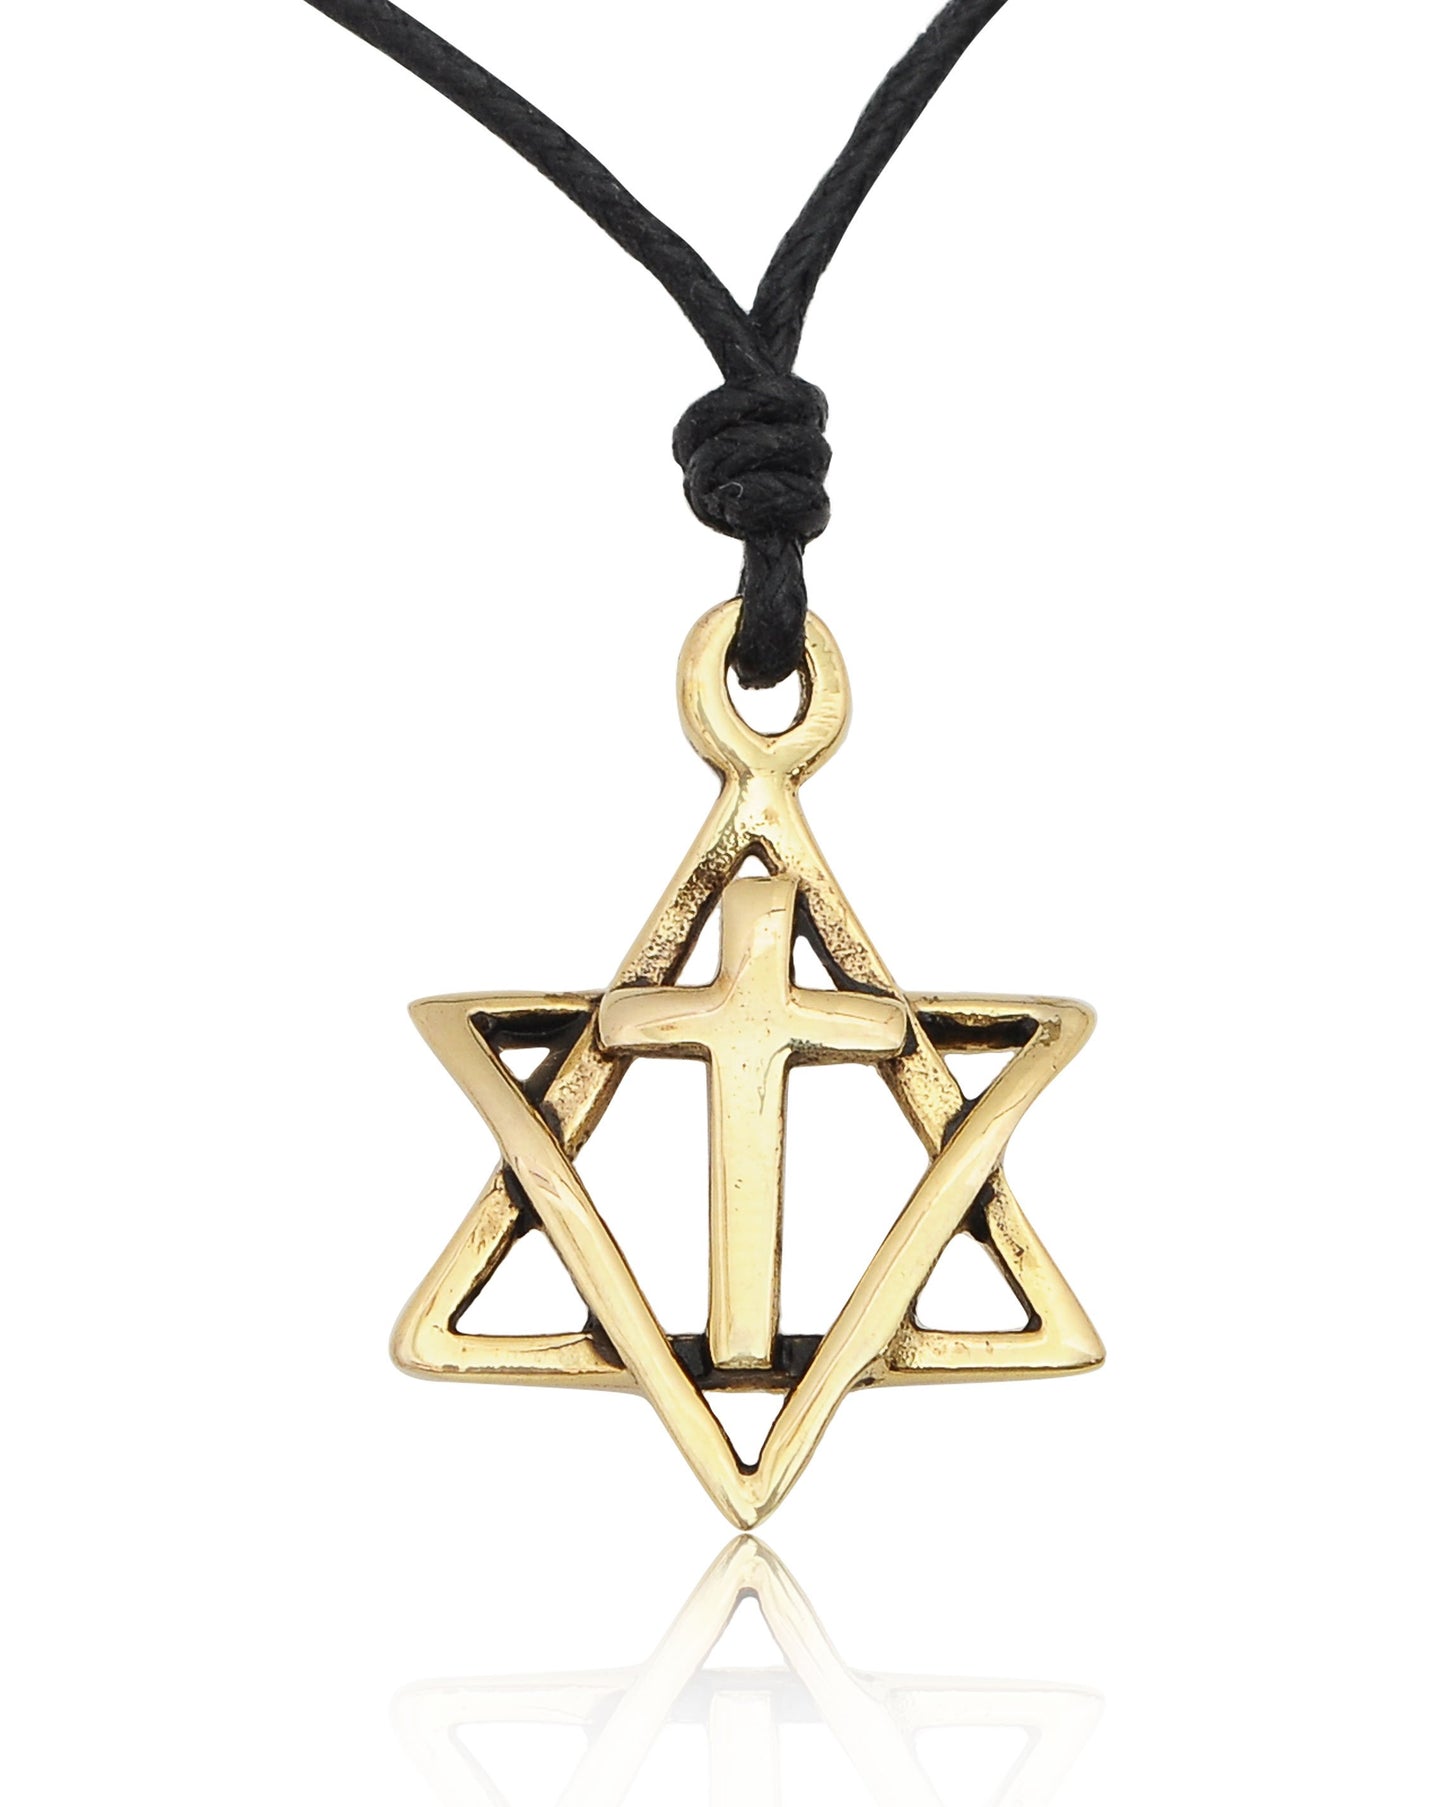 Jewish Jesus Star of David 92.5 Sterling Silver Brass Necklace Pendant Jewelry